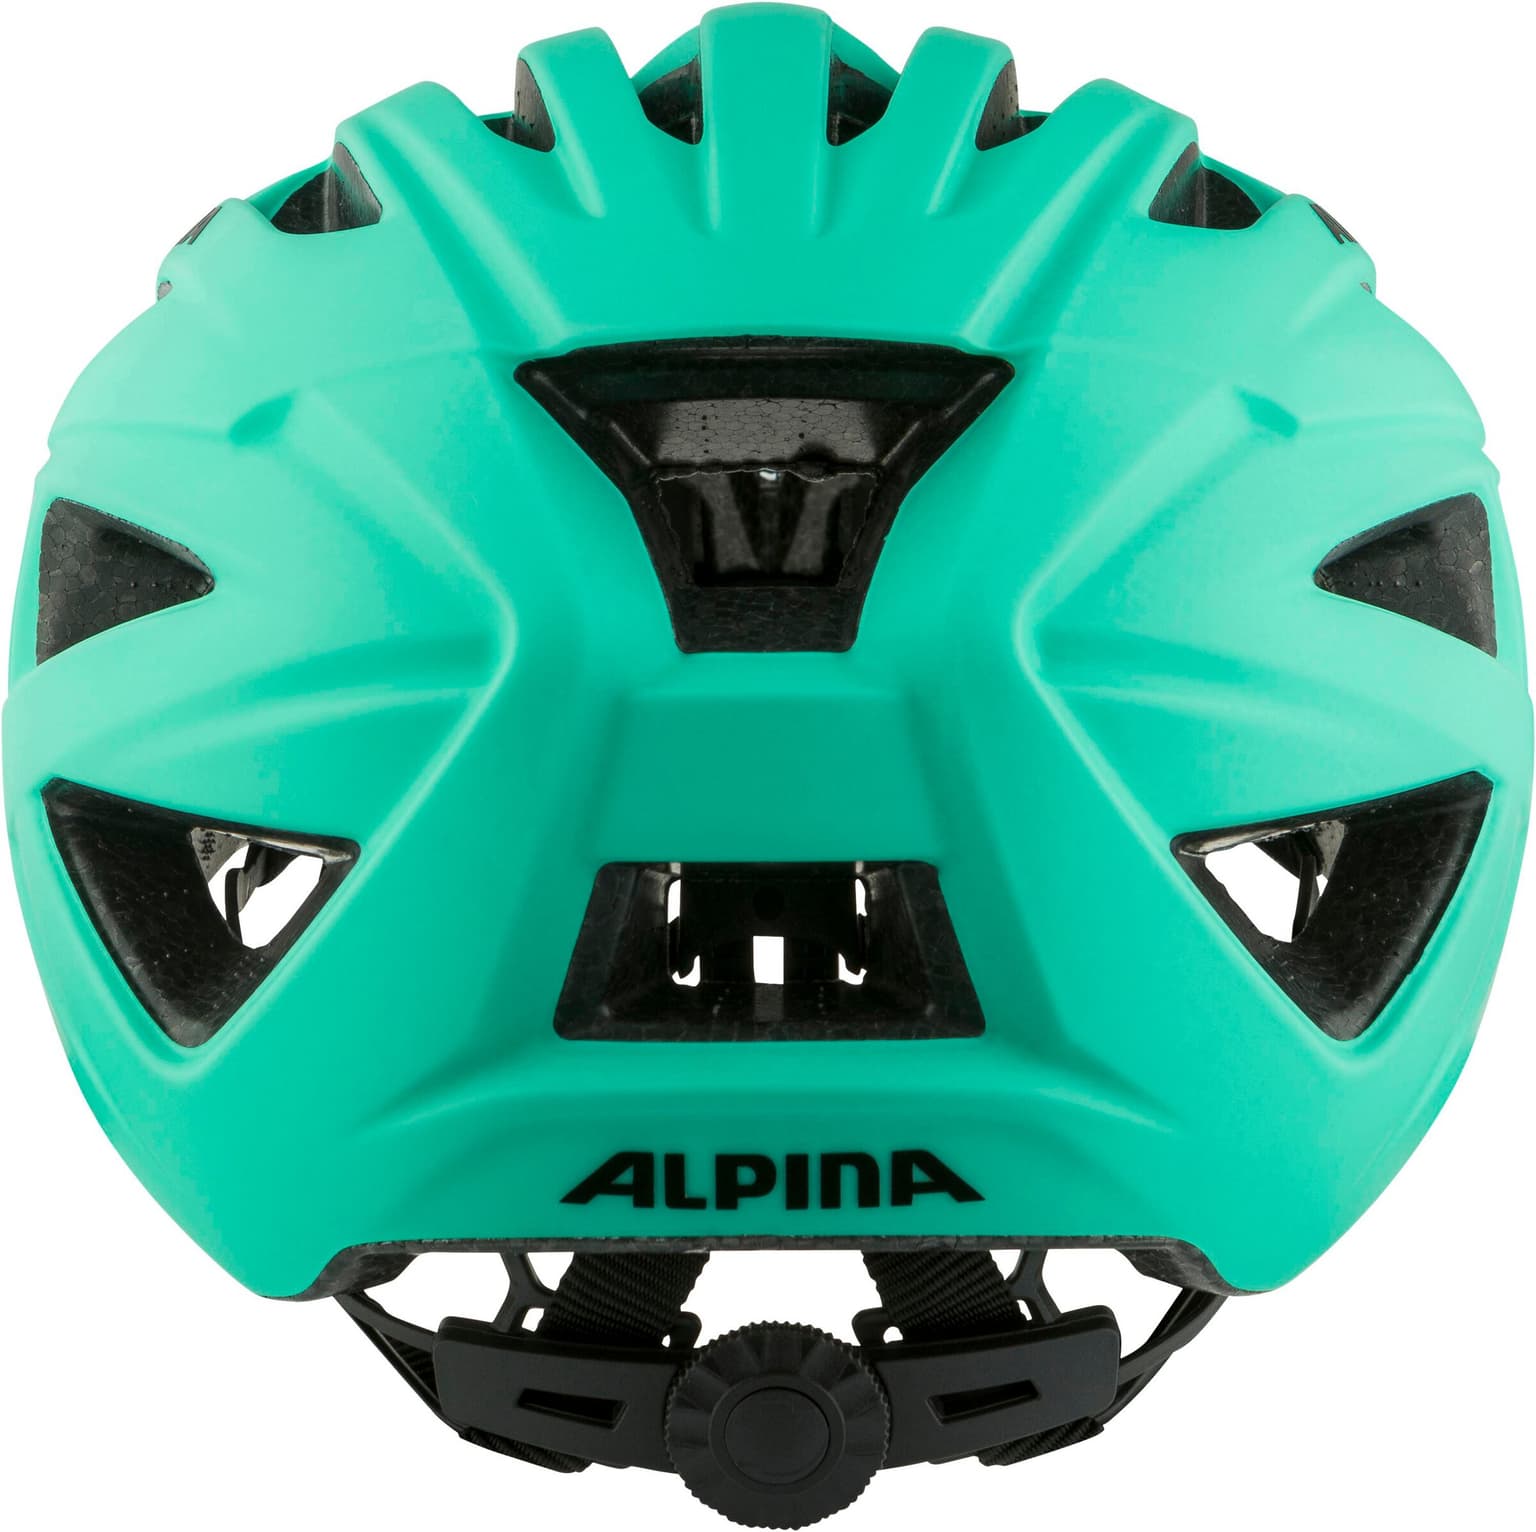 Alpina Alpina PARANA casque de vélo turquoise-claire 4